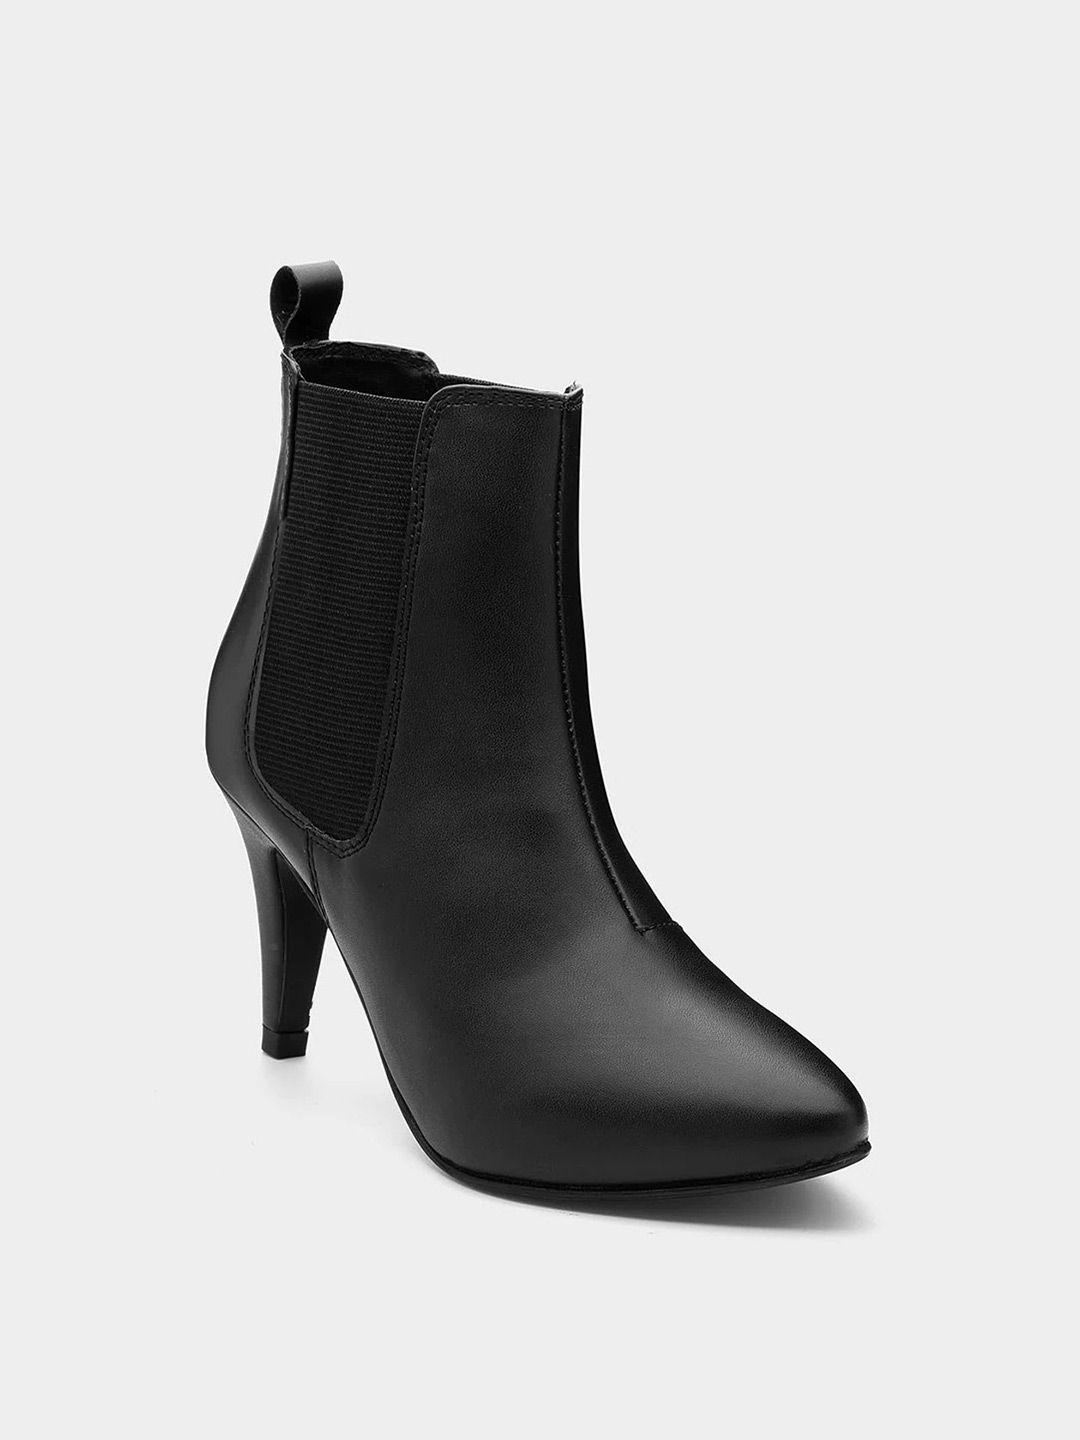 miseen-women-mid-top-pointed-toe-textured-kitten-heel-chelsea-boots